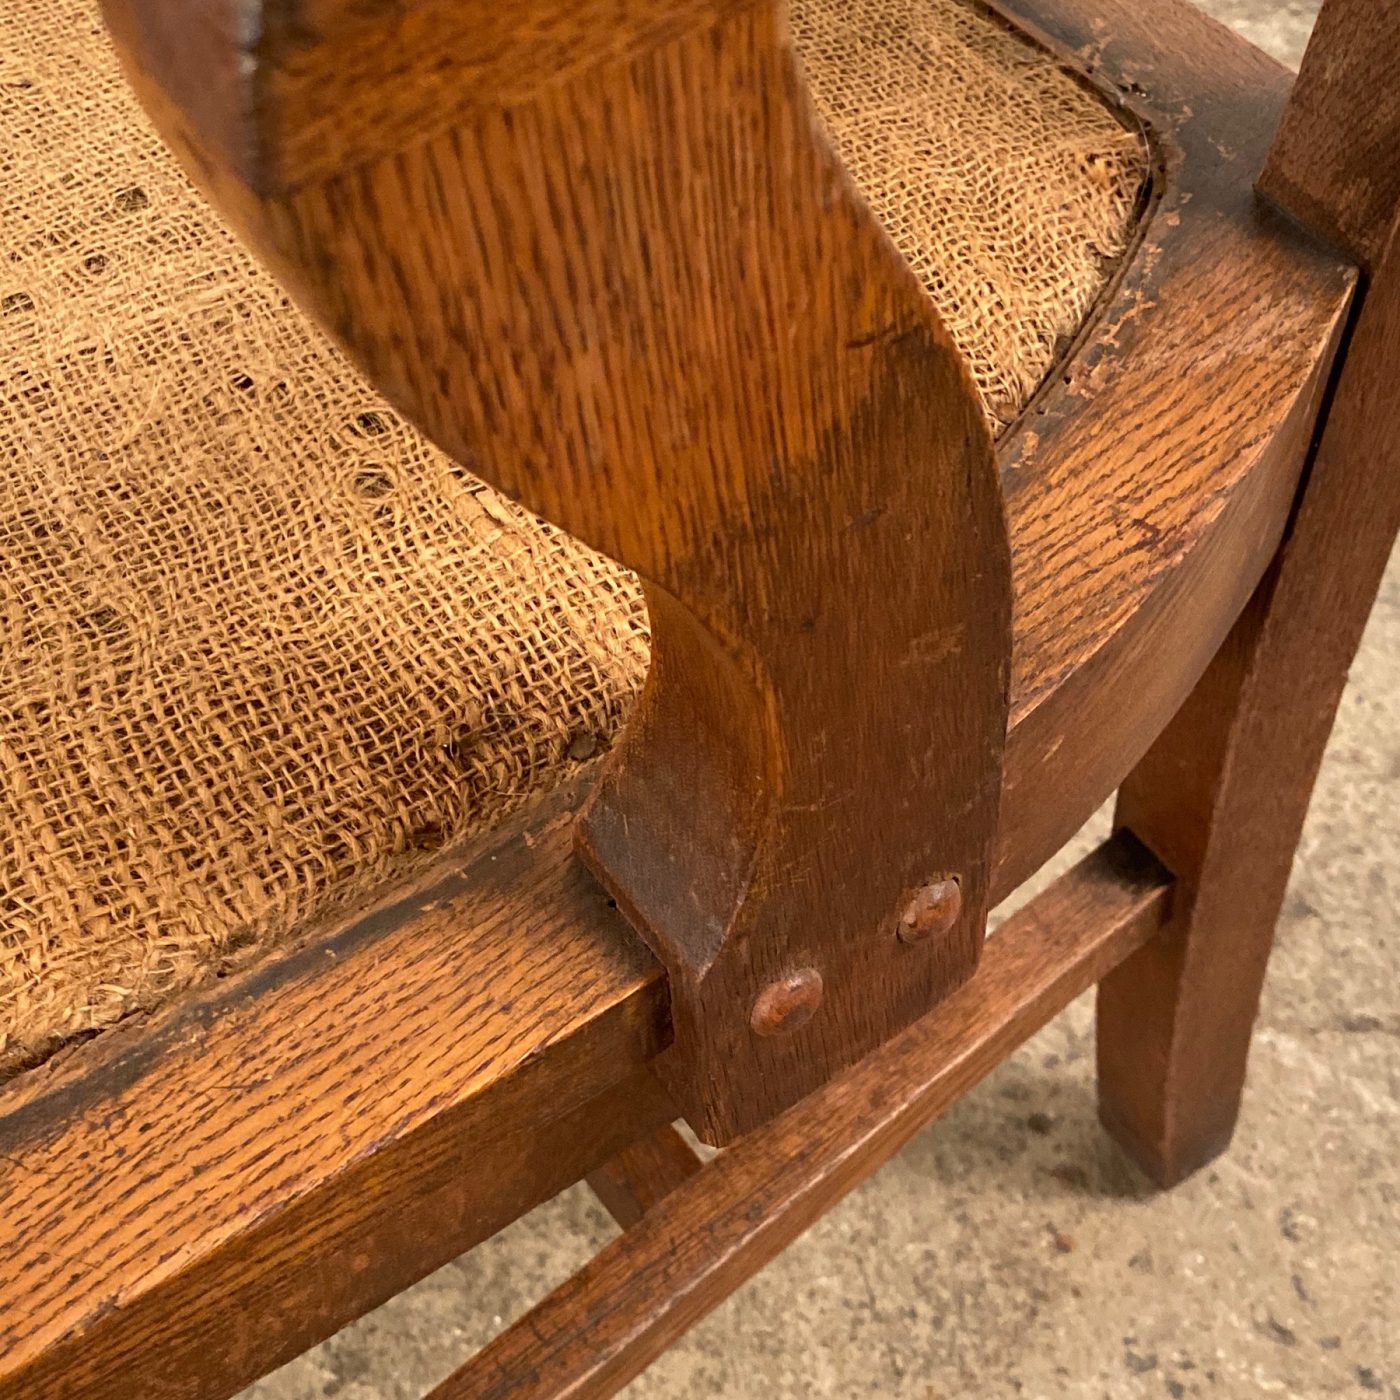 objet-vagabond-oak-chairs0004